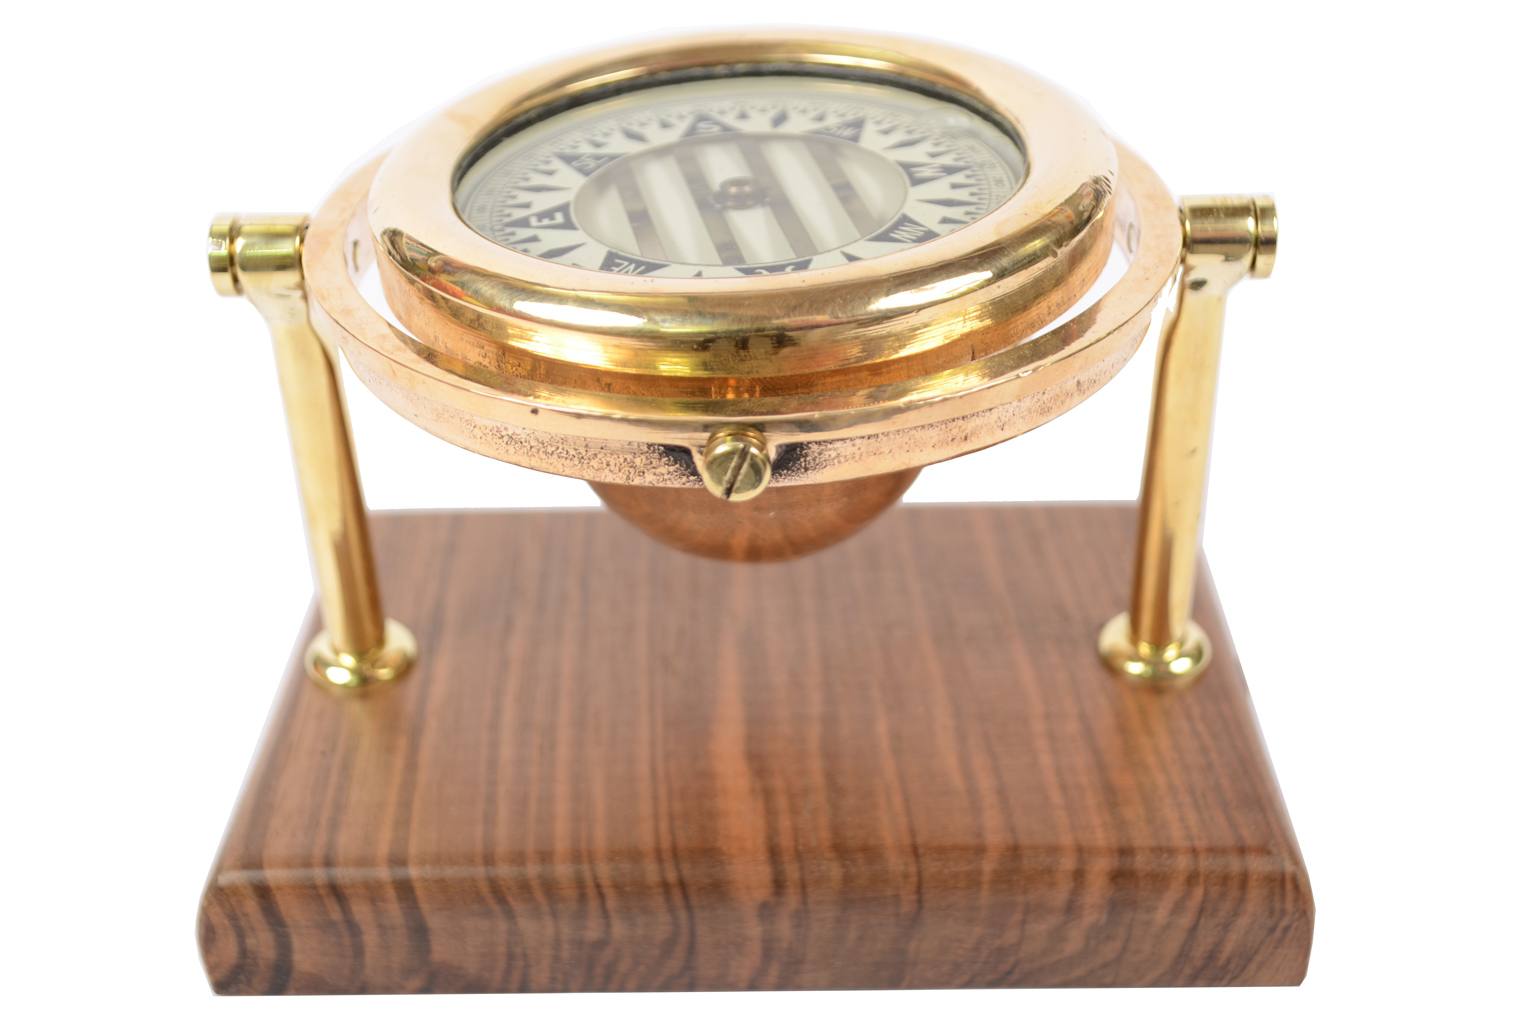 e-Shop/Antique compasses/Code 5908 American compass 1900